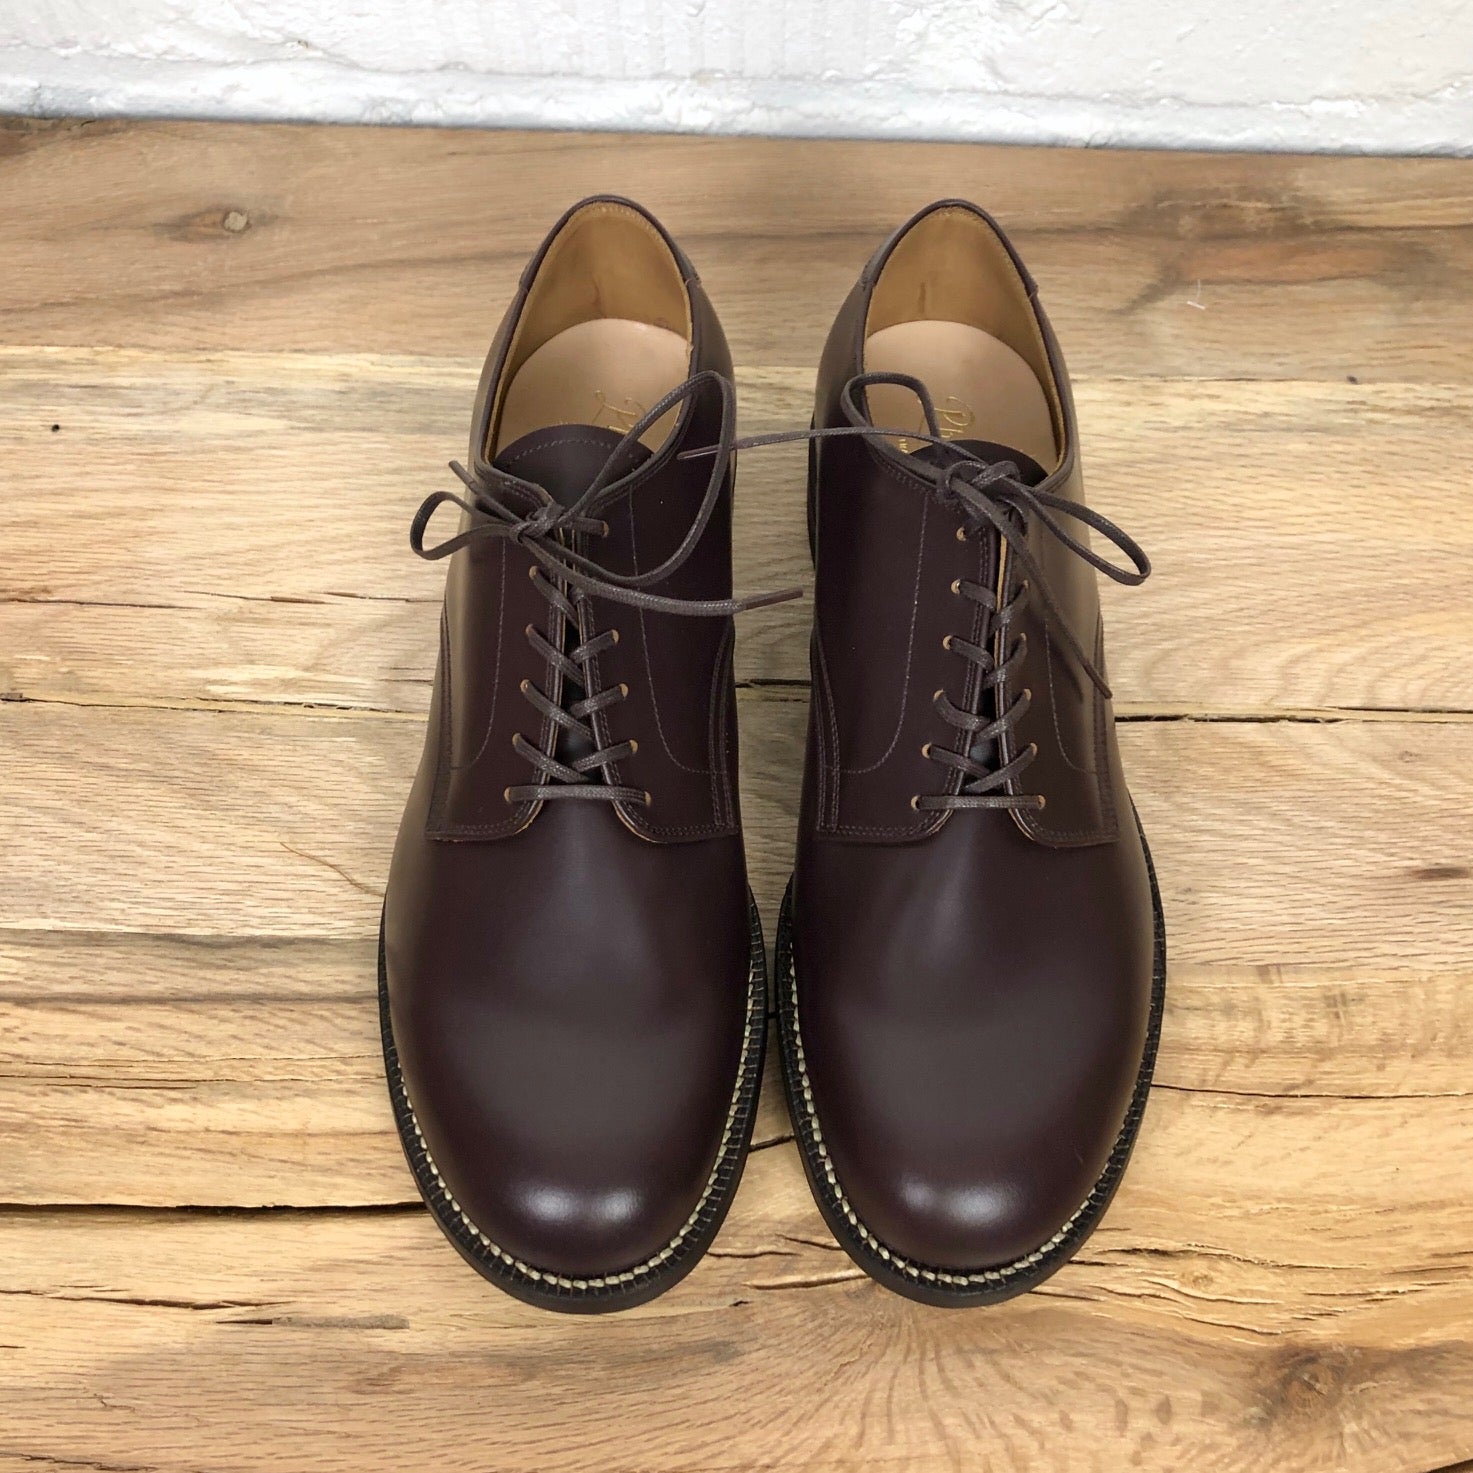 phigvel makers co. | service shoes burgundy